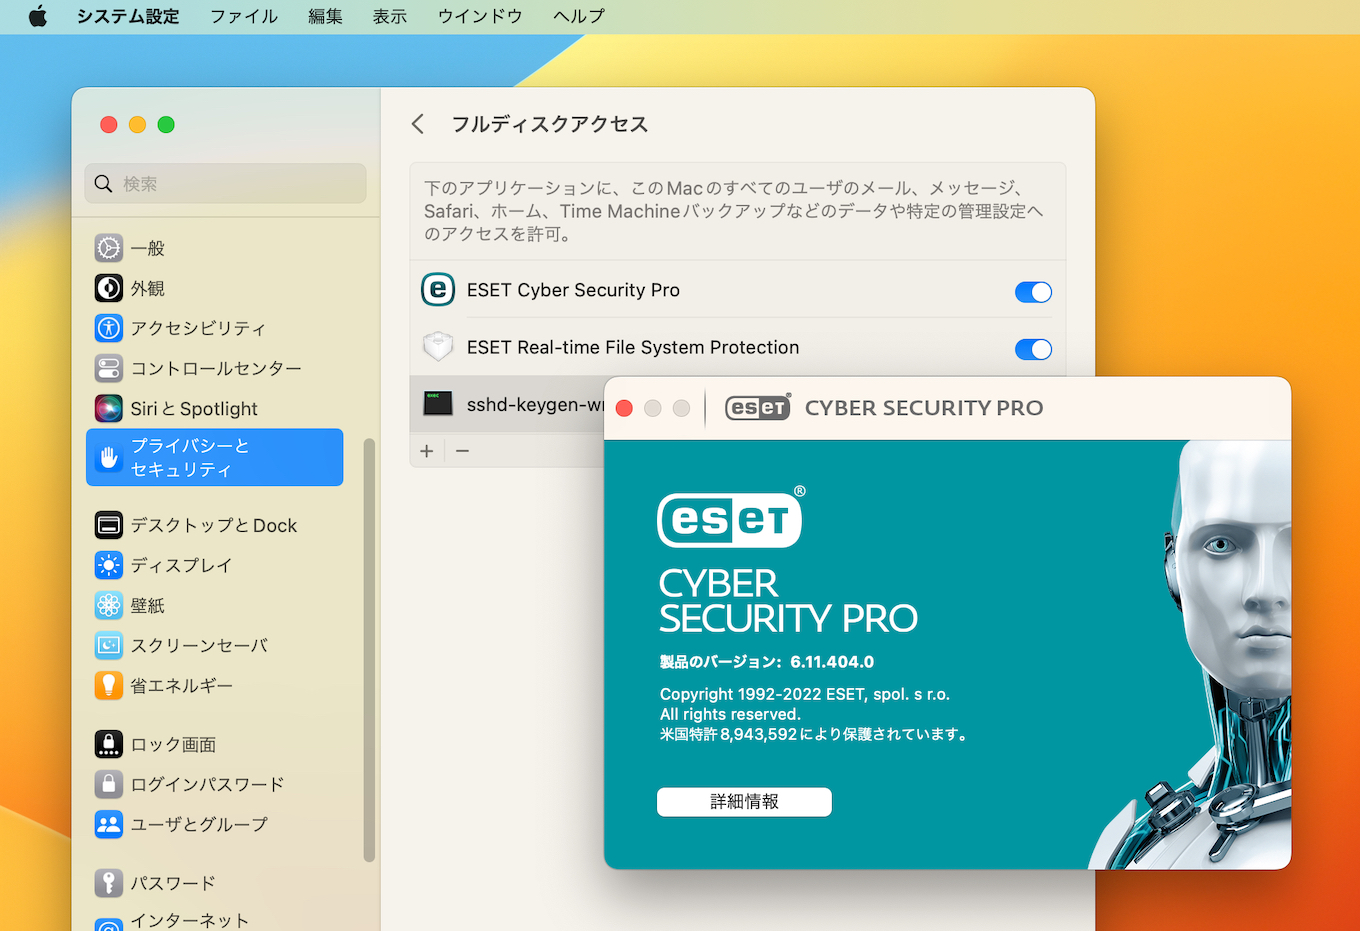 ESET Cyber Security /Pro for macOS 13 Ventura